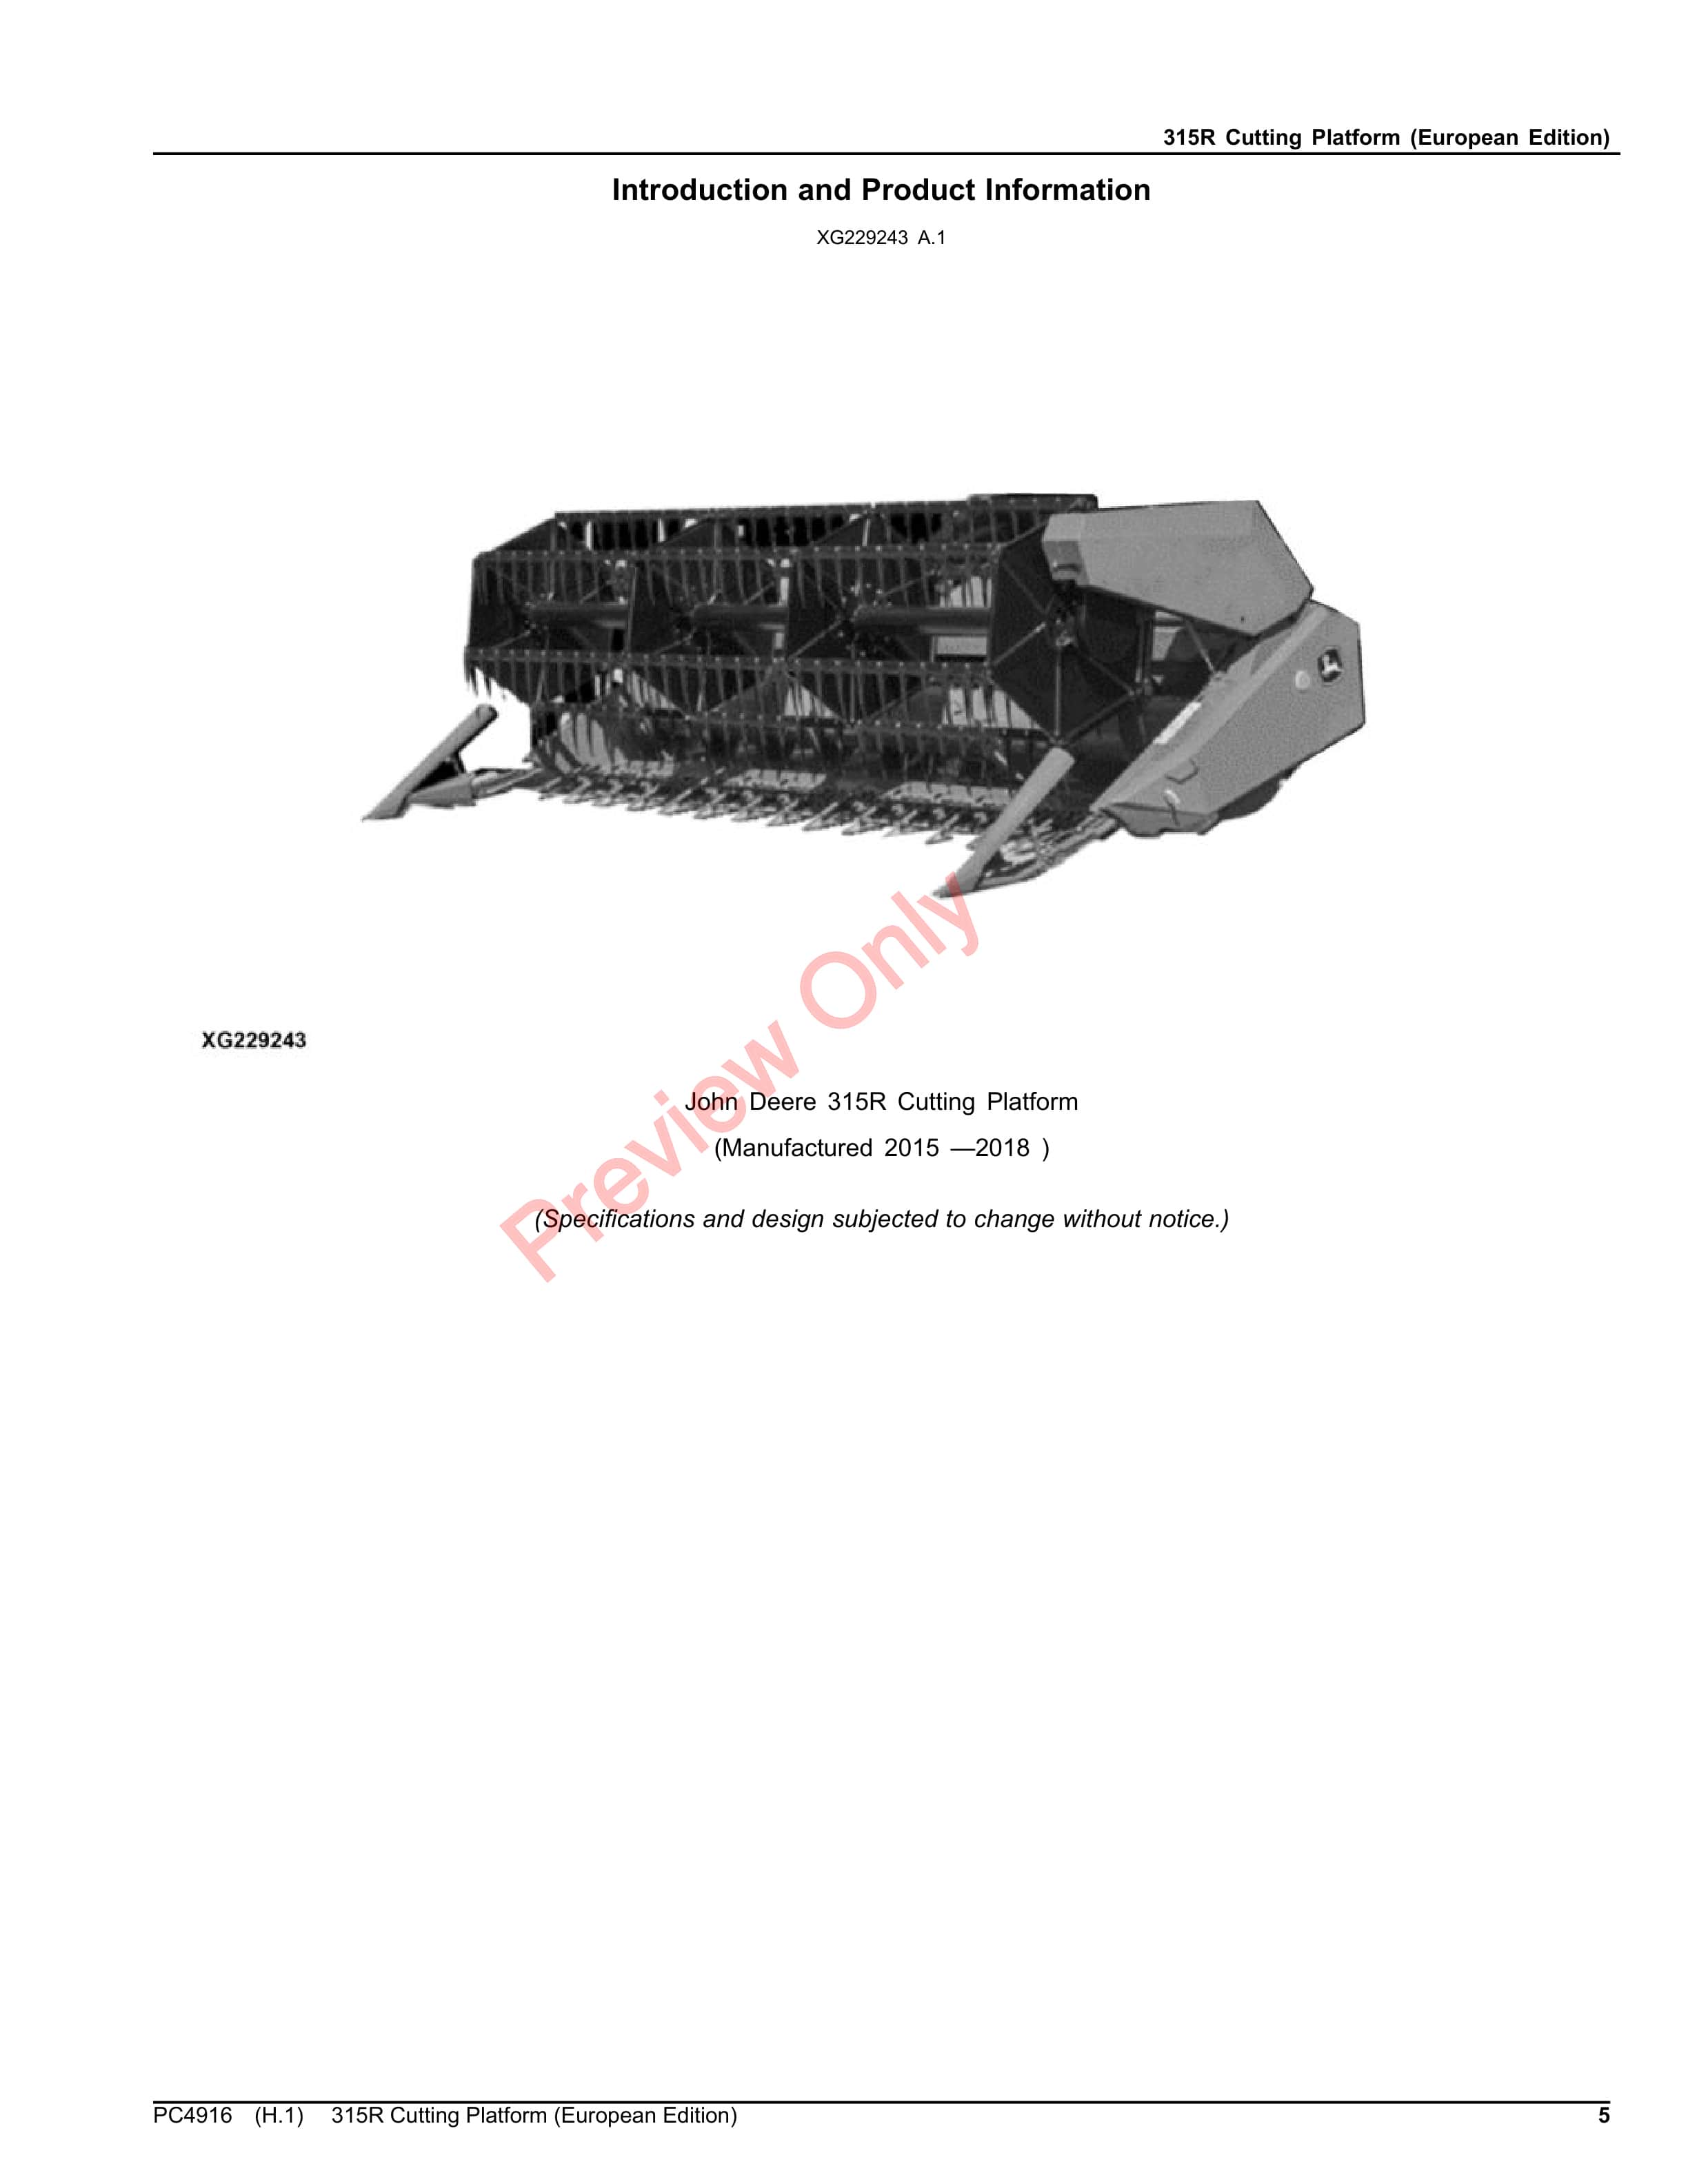 John Deere 315R Cutting Platform Parts Catalog PC4916 25OCT19-5